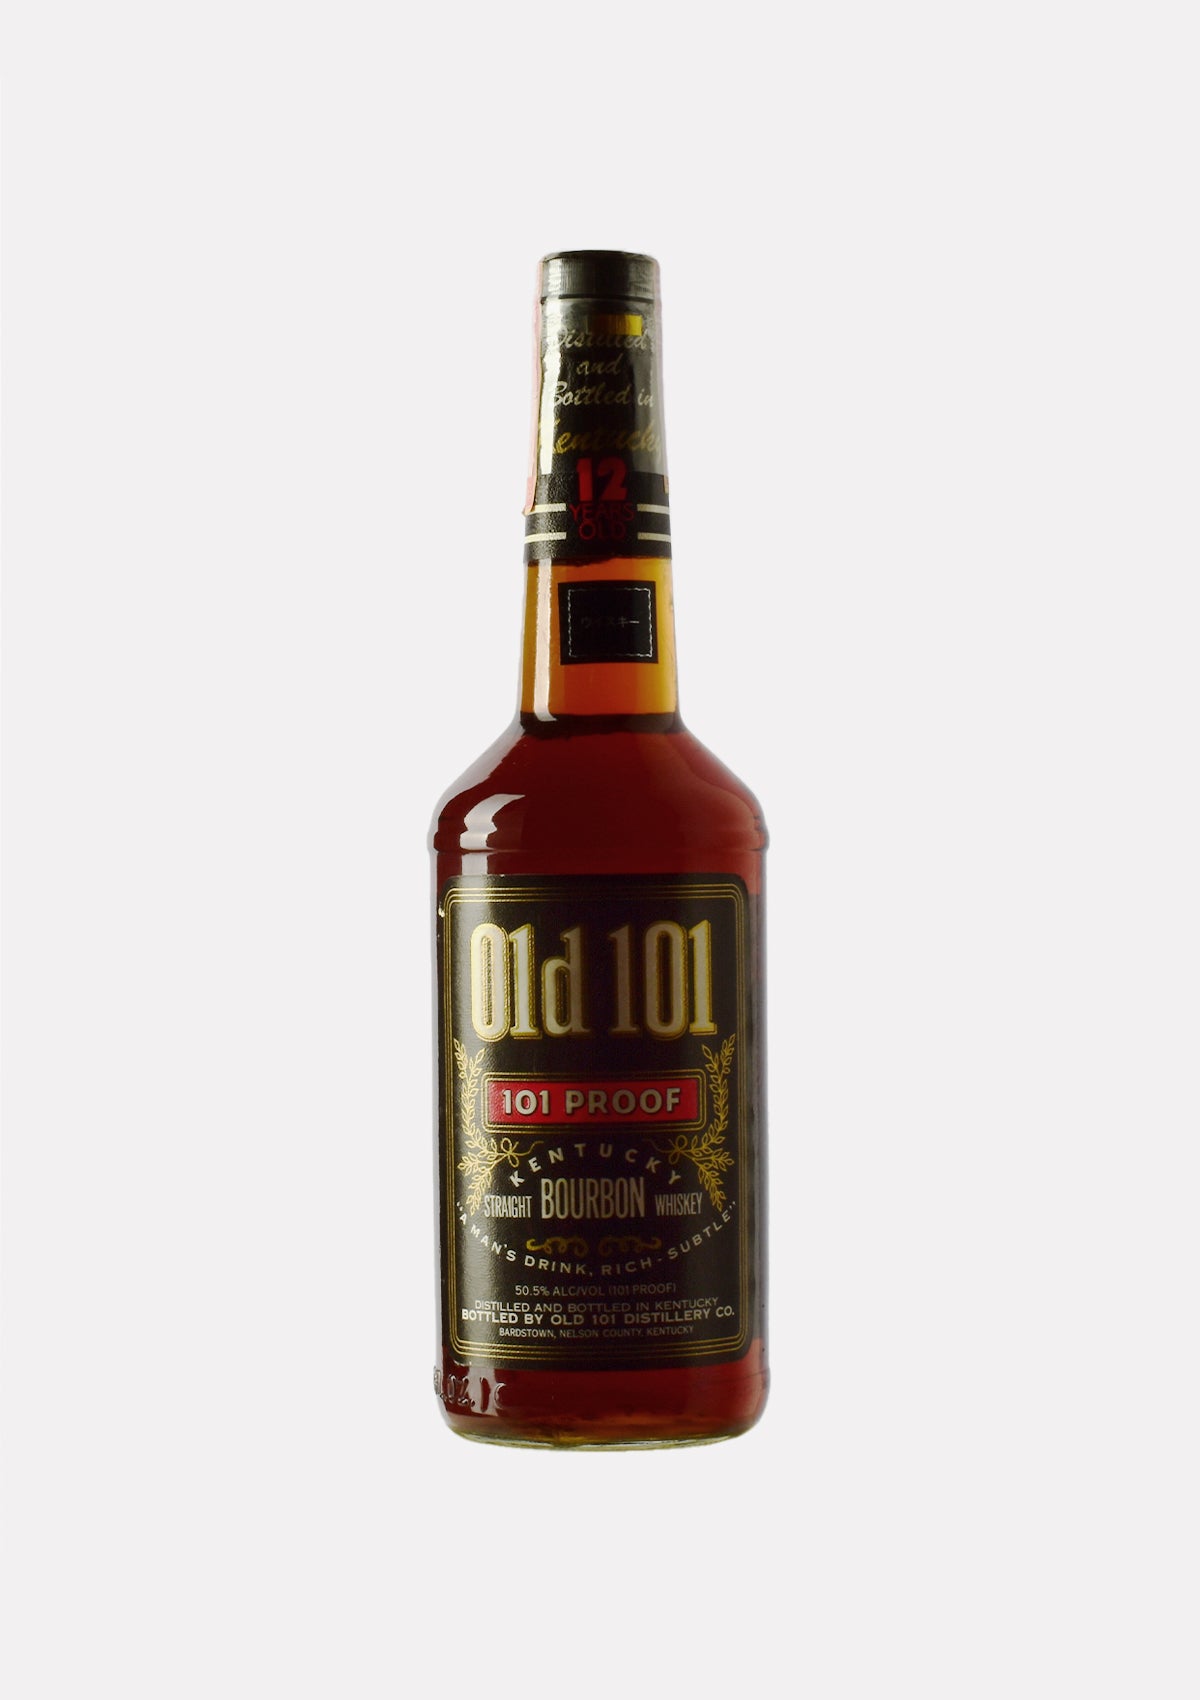 Old 101 Kentucky Straight Bourbon Whiskey 12 Jahre